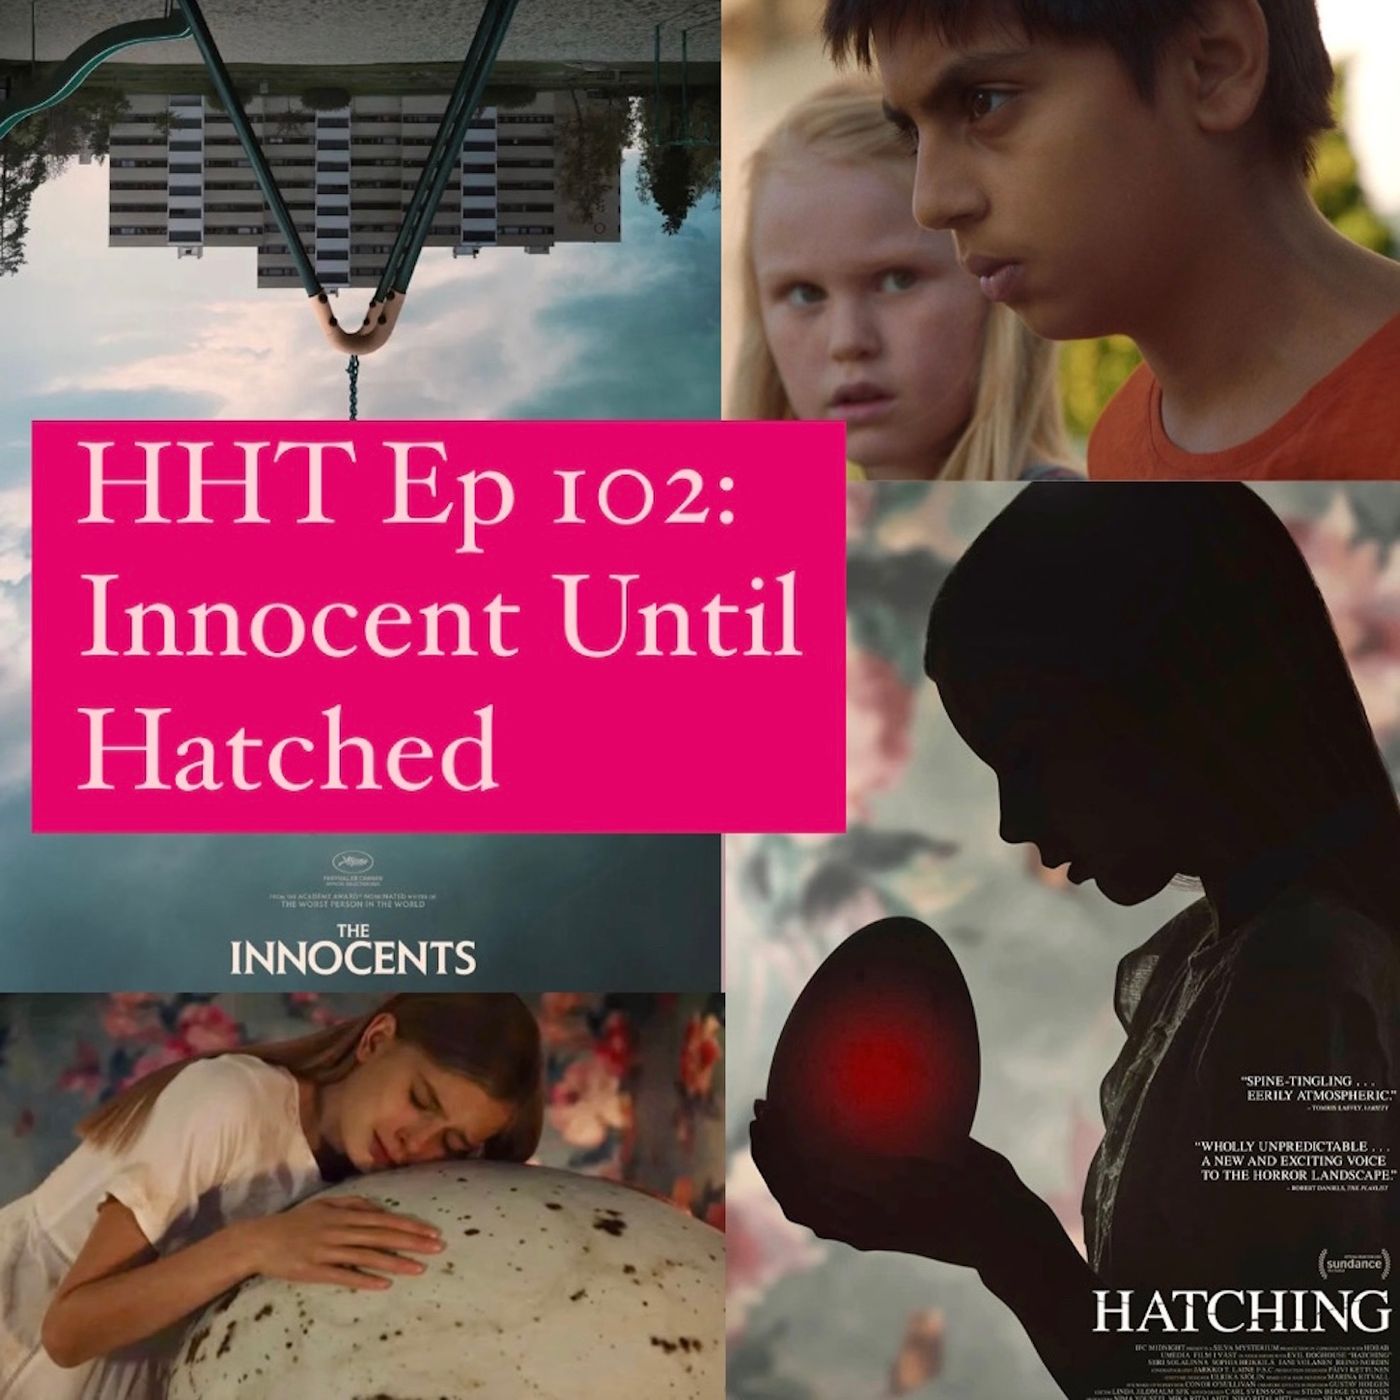 Ep 102: Innocent Until Hatched